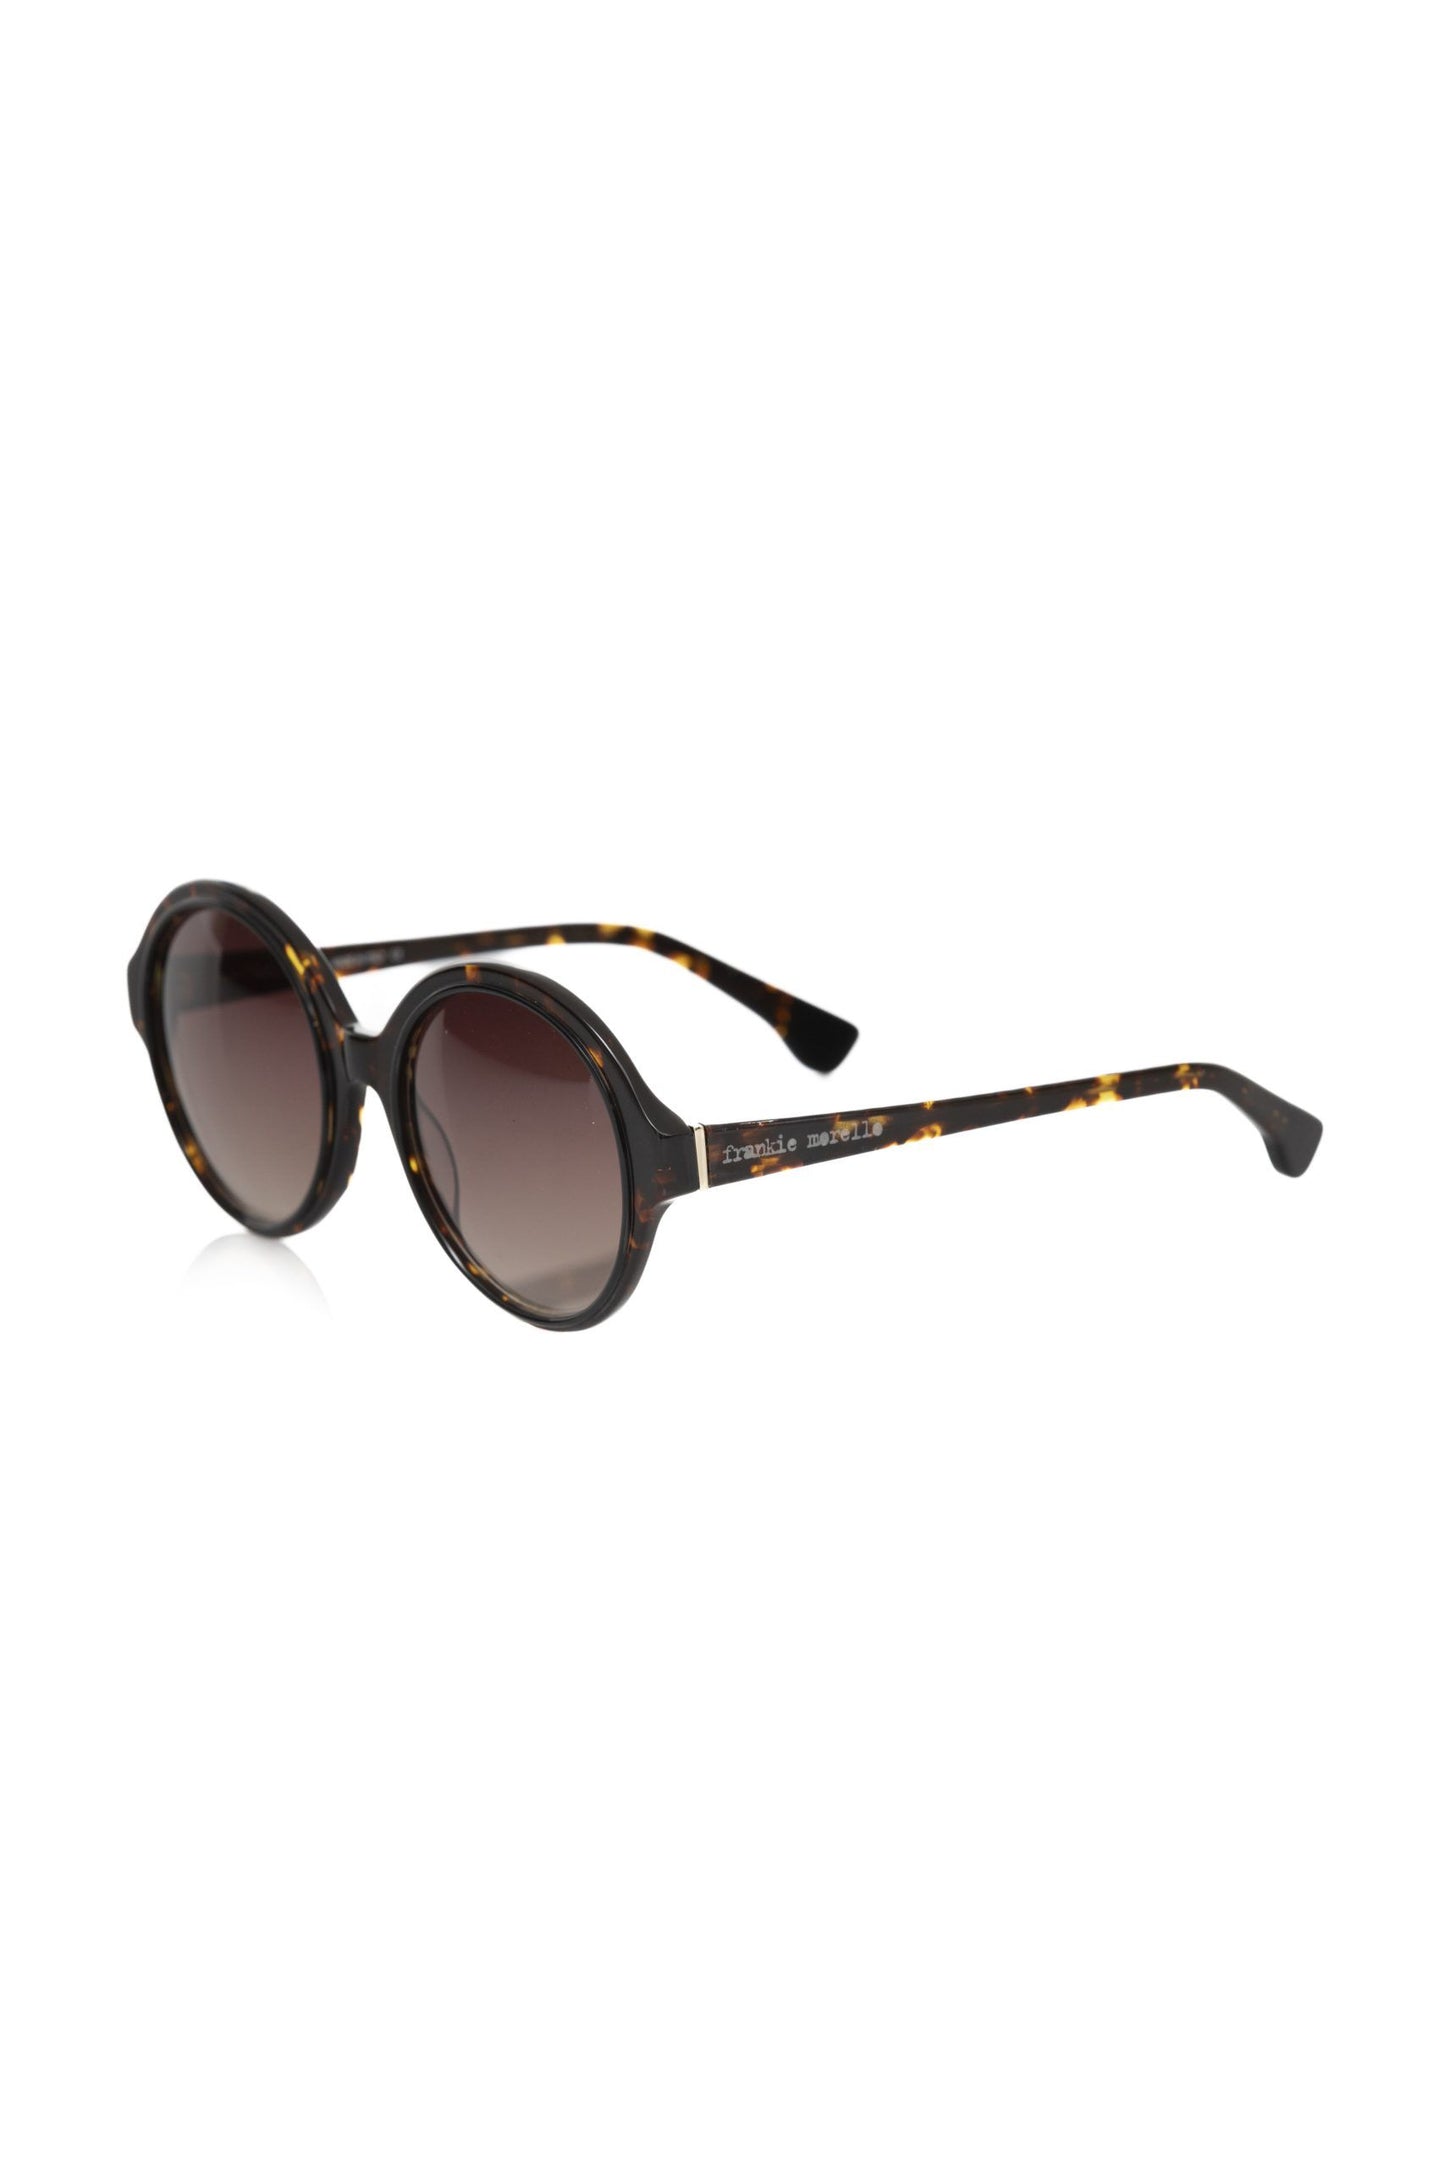 Frankie Morello FRMO-22071 Black Acetate Sunglasses